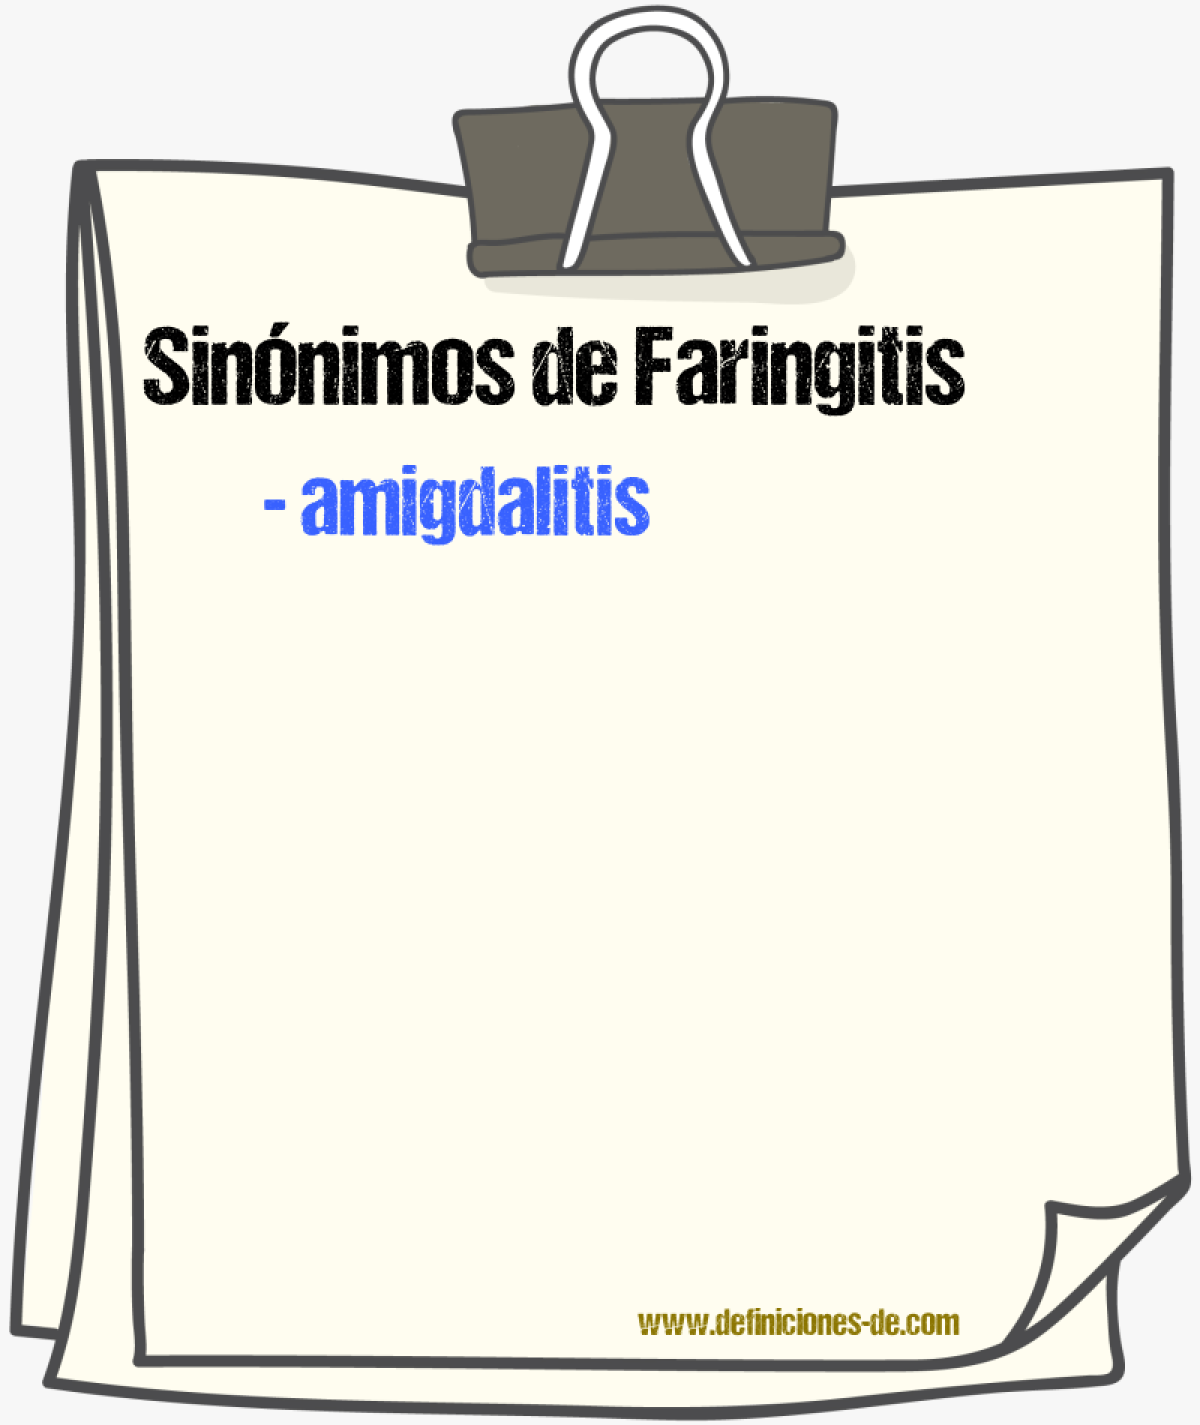 Sinnimos de faringitis